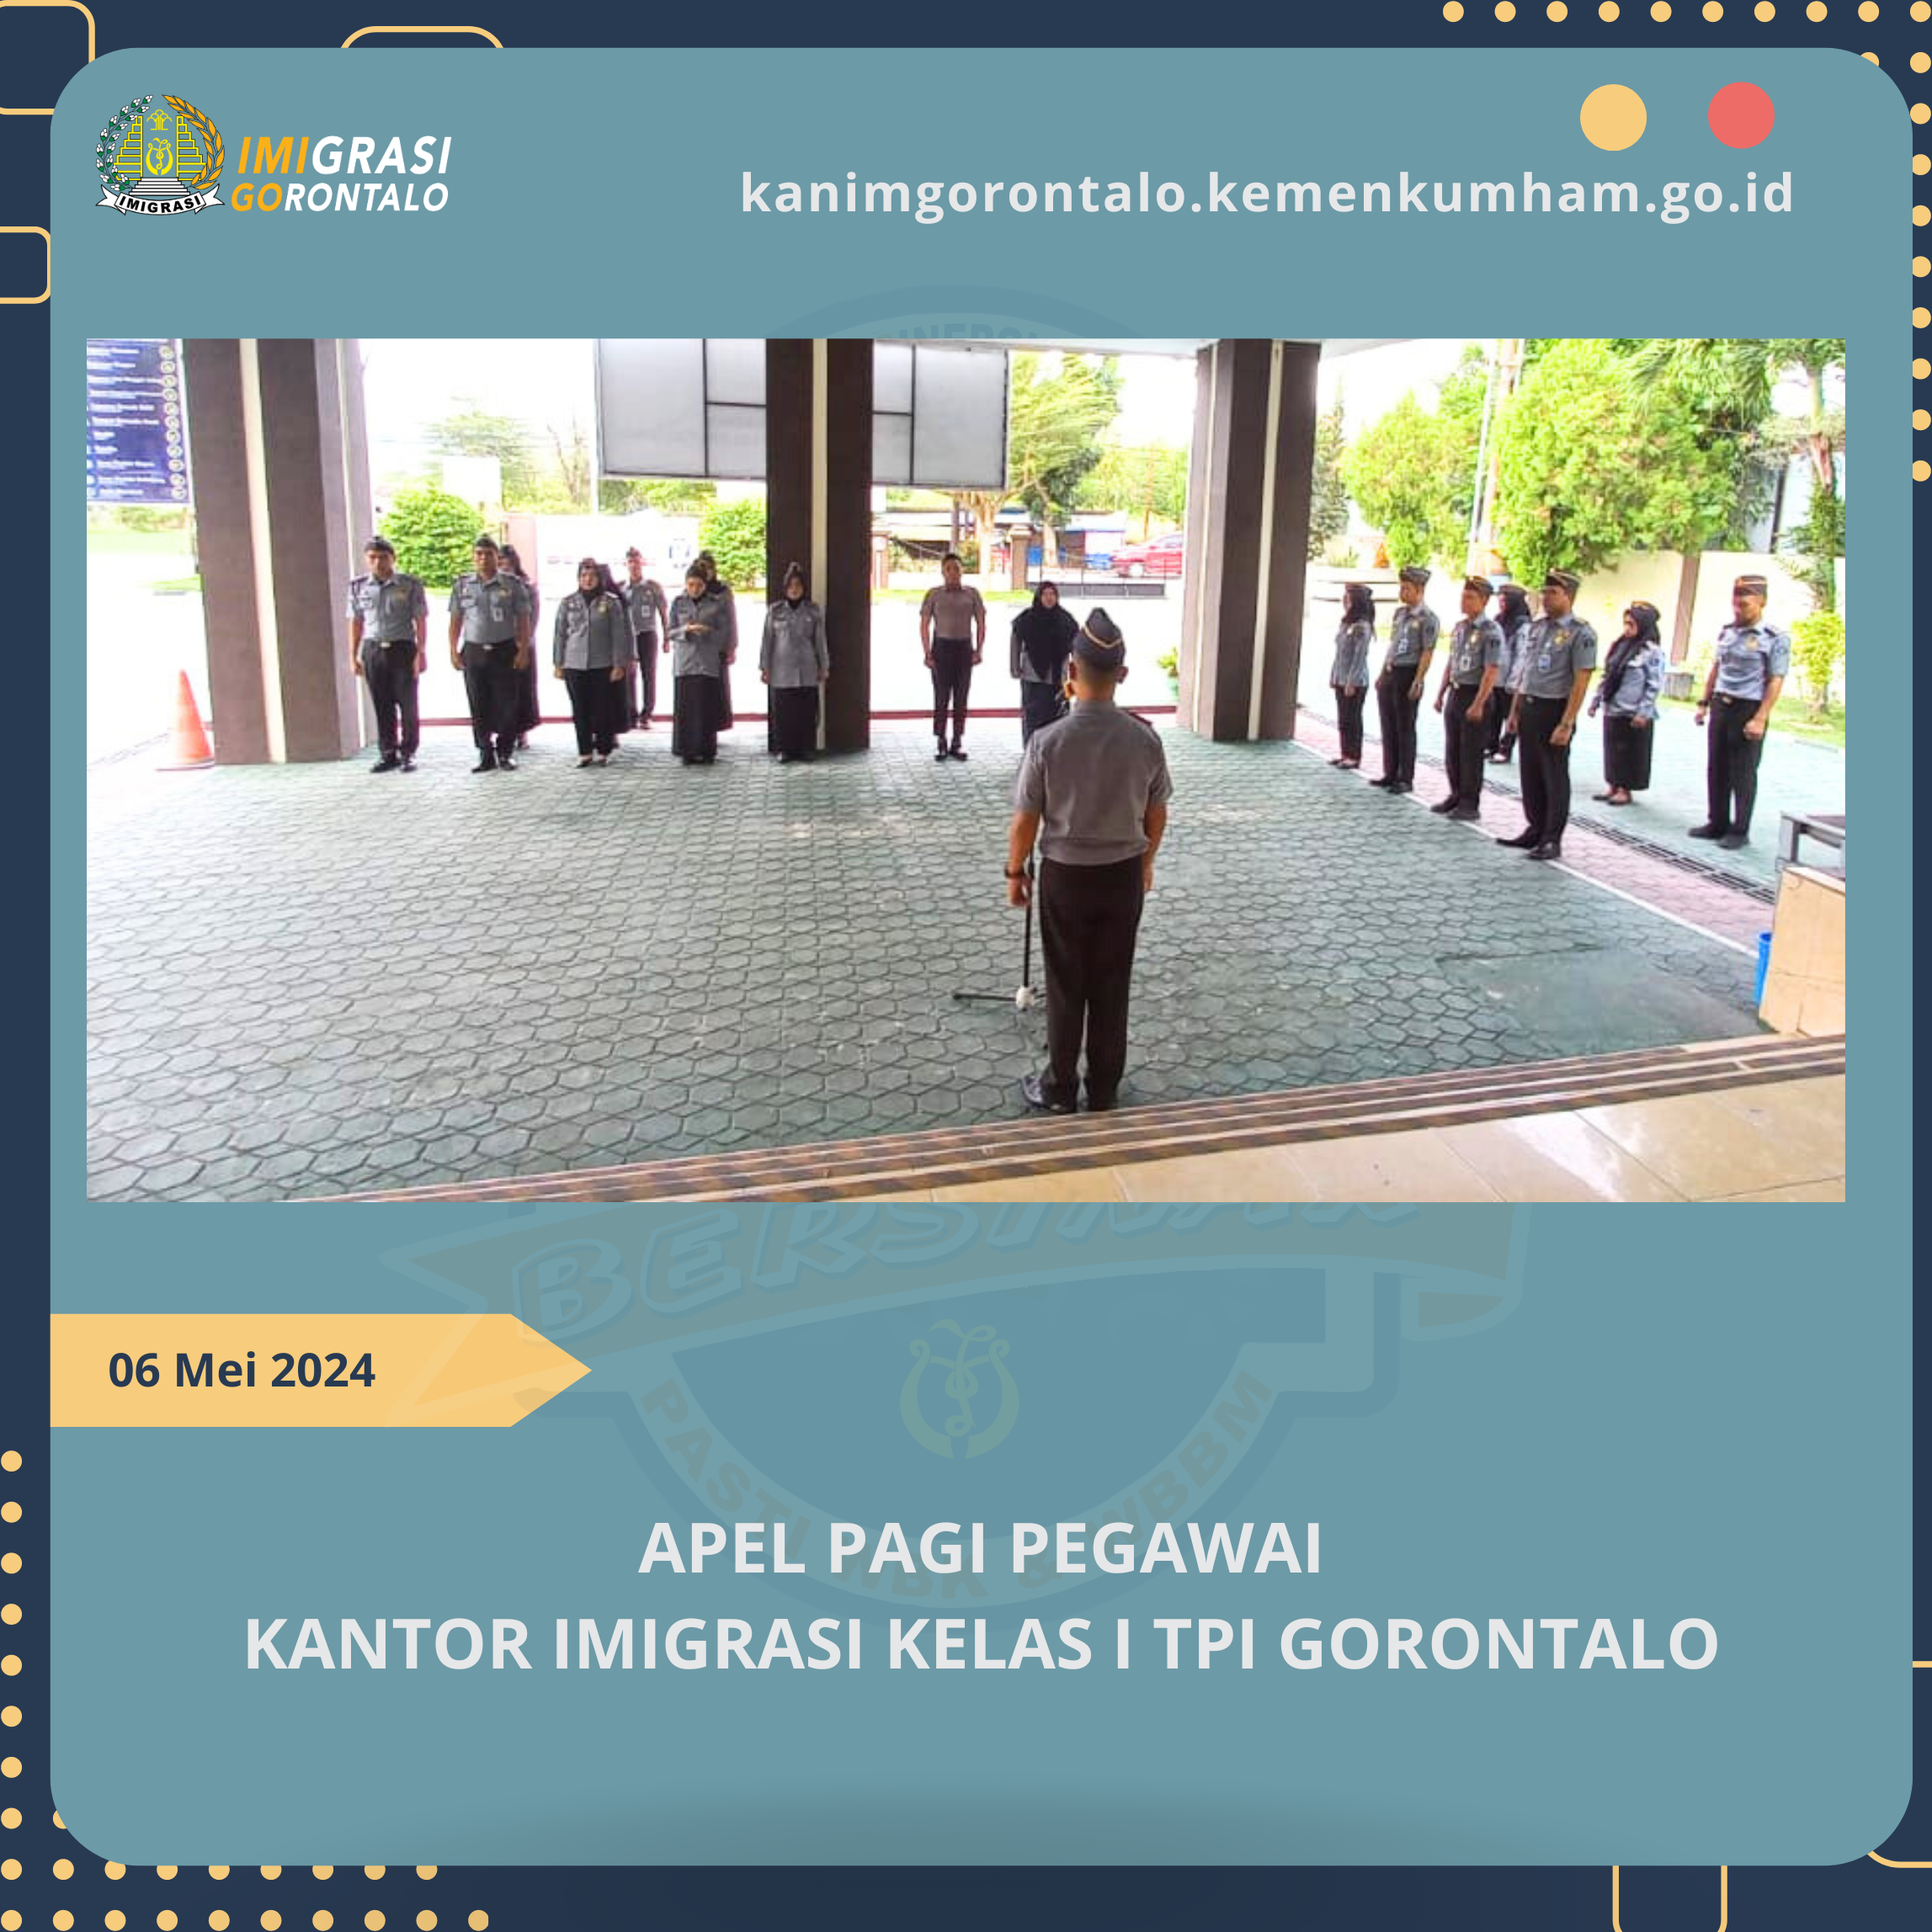 Pelaksanaan Apel Pagi Pegawai Kantor Imigrasi Gorontalo, Senin 6 Mei 2024